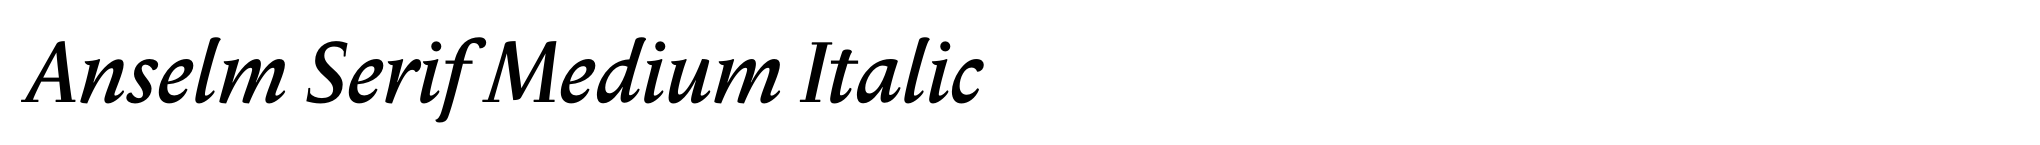 Anselm Serif Medium Italic image